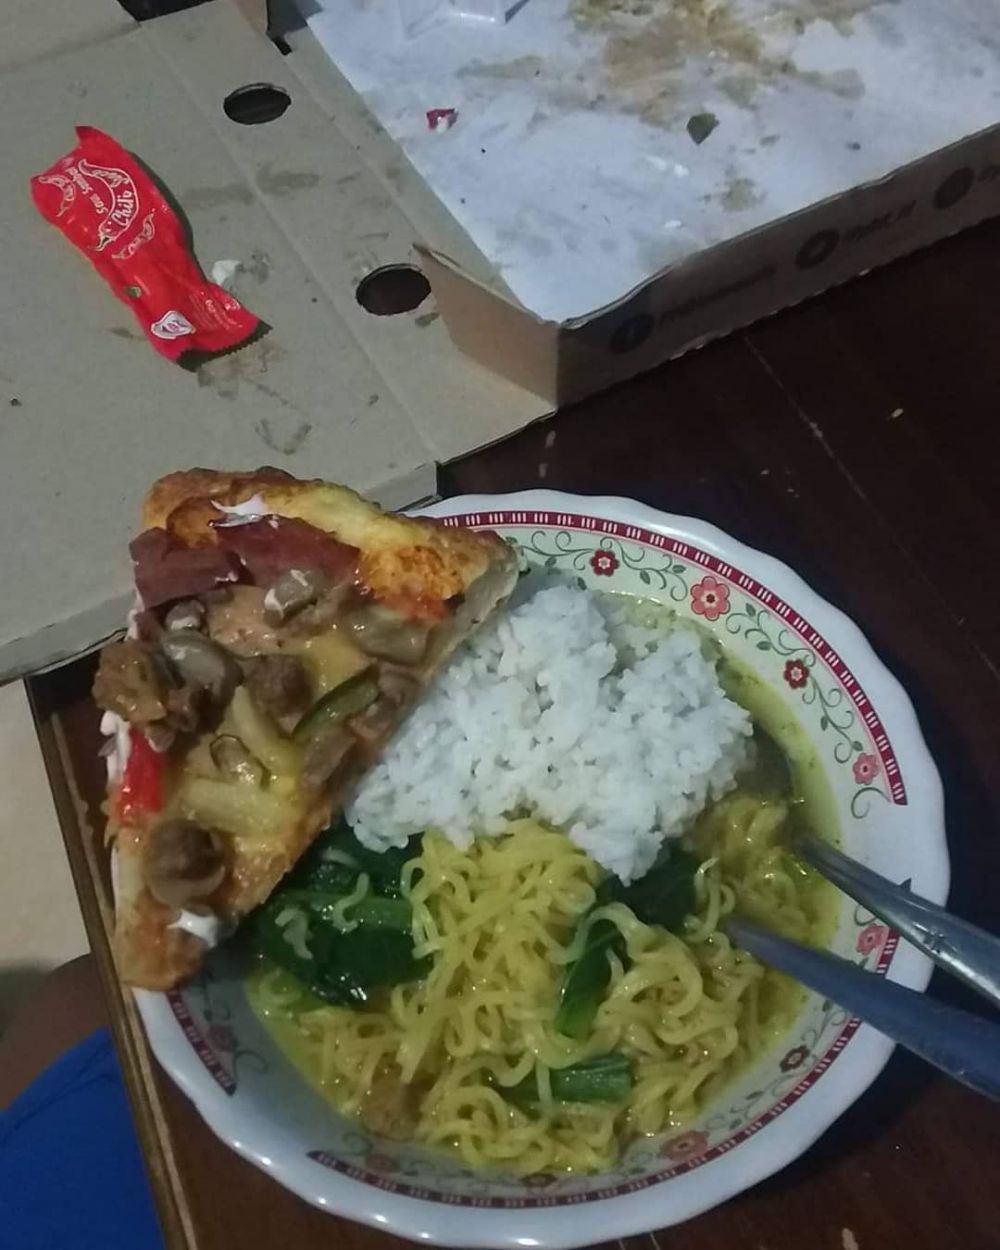 10 Potret lucu makan pizza ala orang Indonesia, bikin tepuk jidat